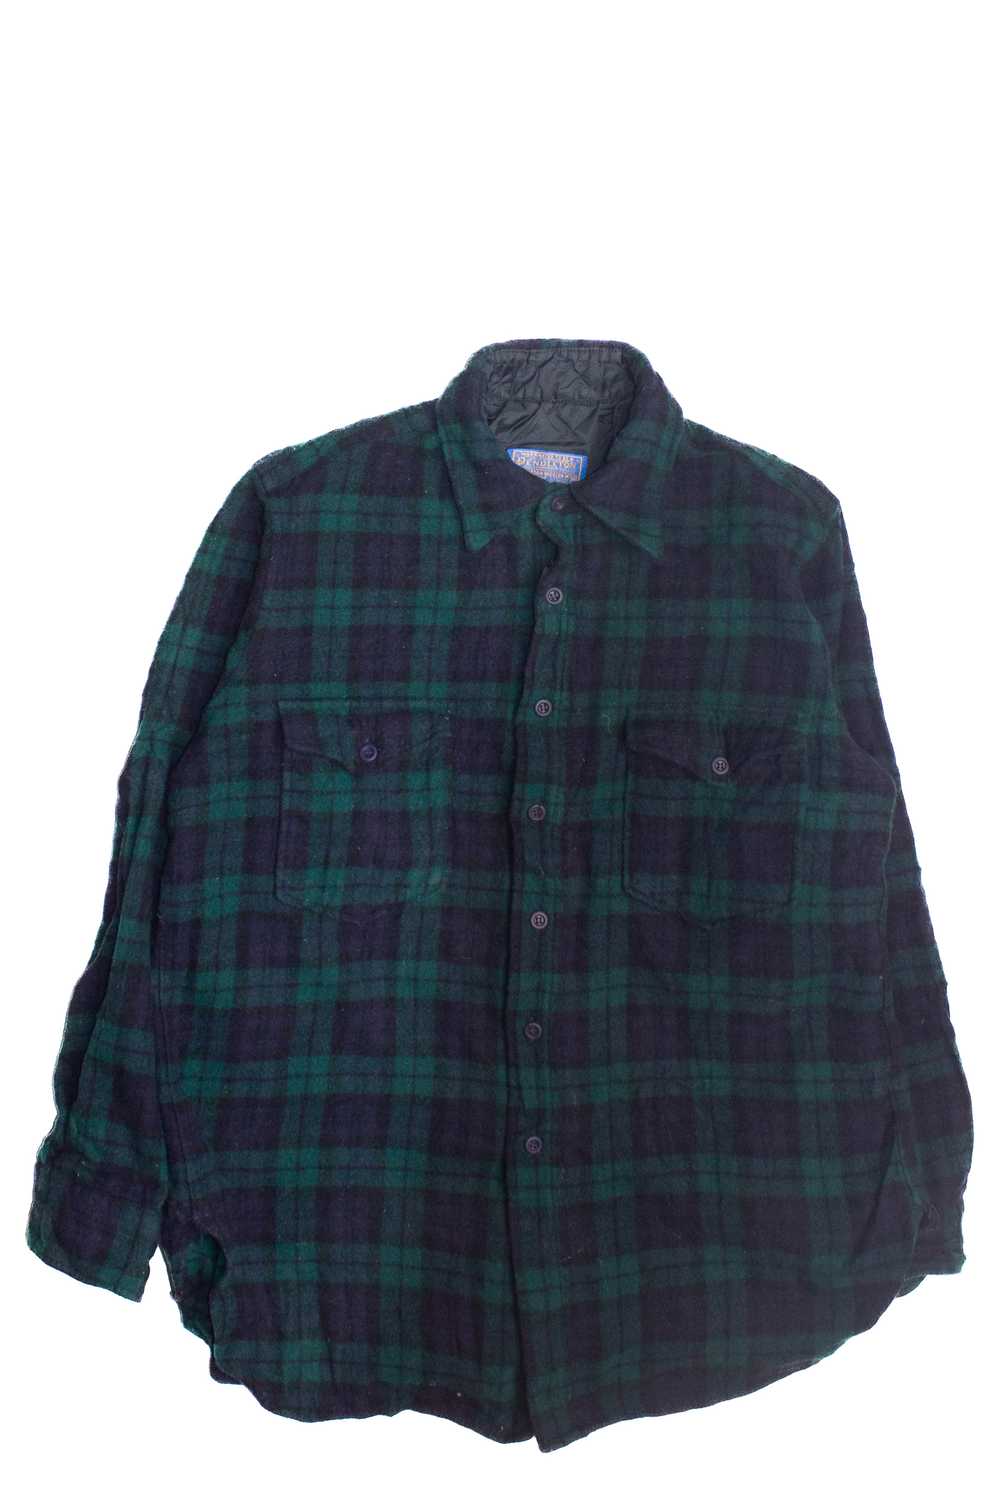 Vintage Pendleton Wool Flannel Lodge Shirt (1990s) - image 1